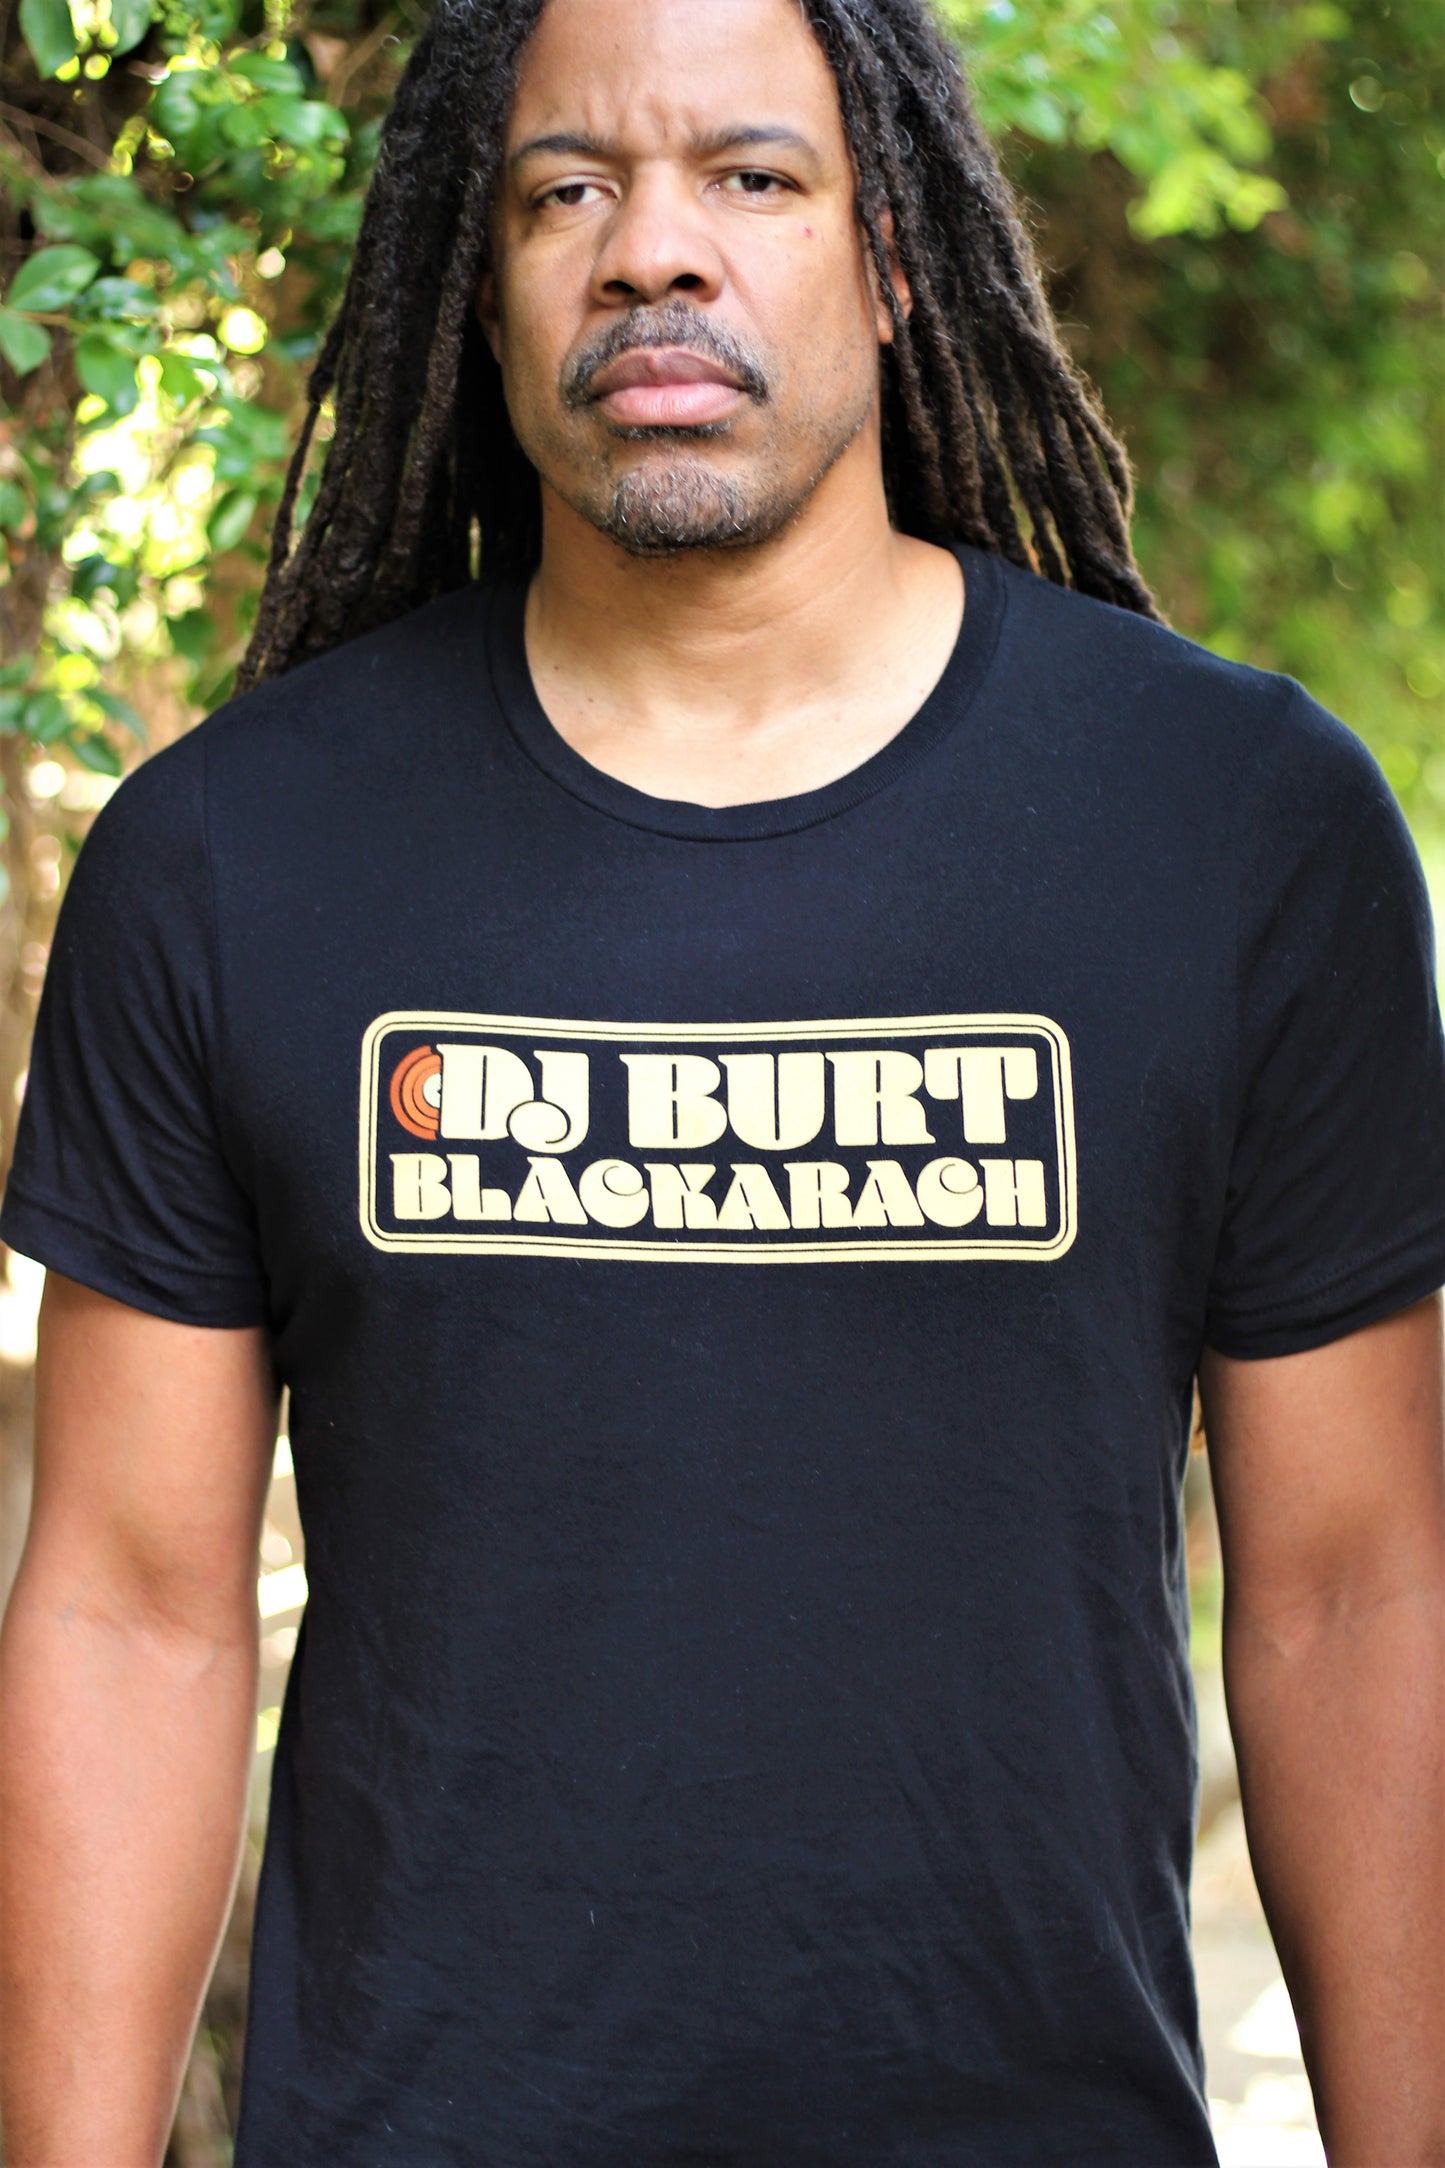 DJ Burt Blackarach - Black with Yellow Font